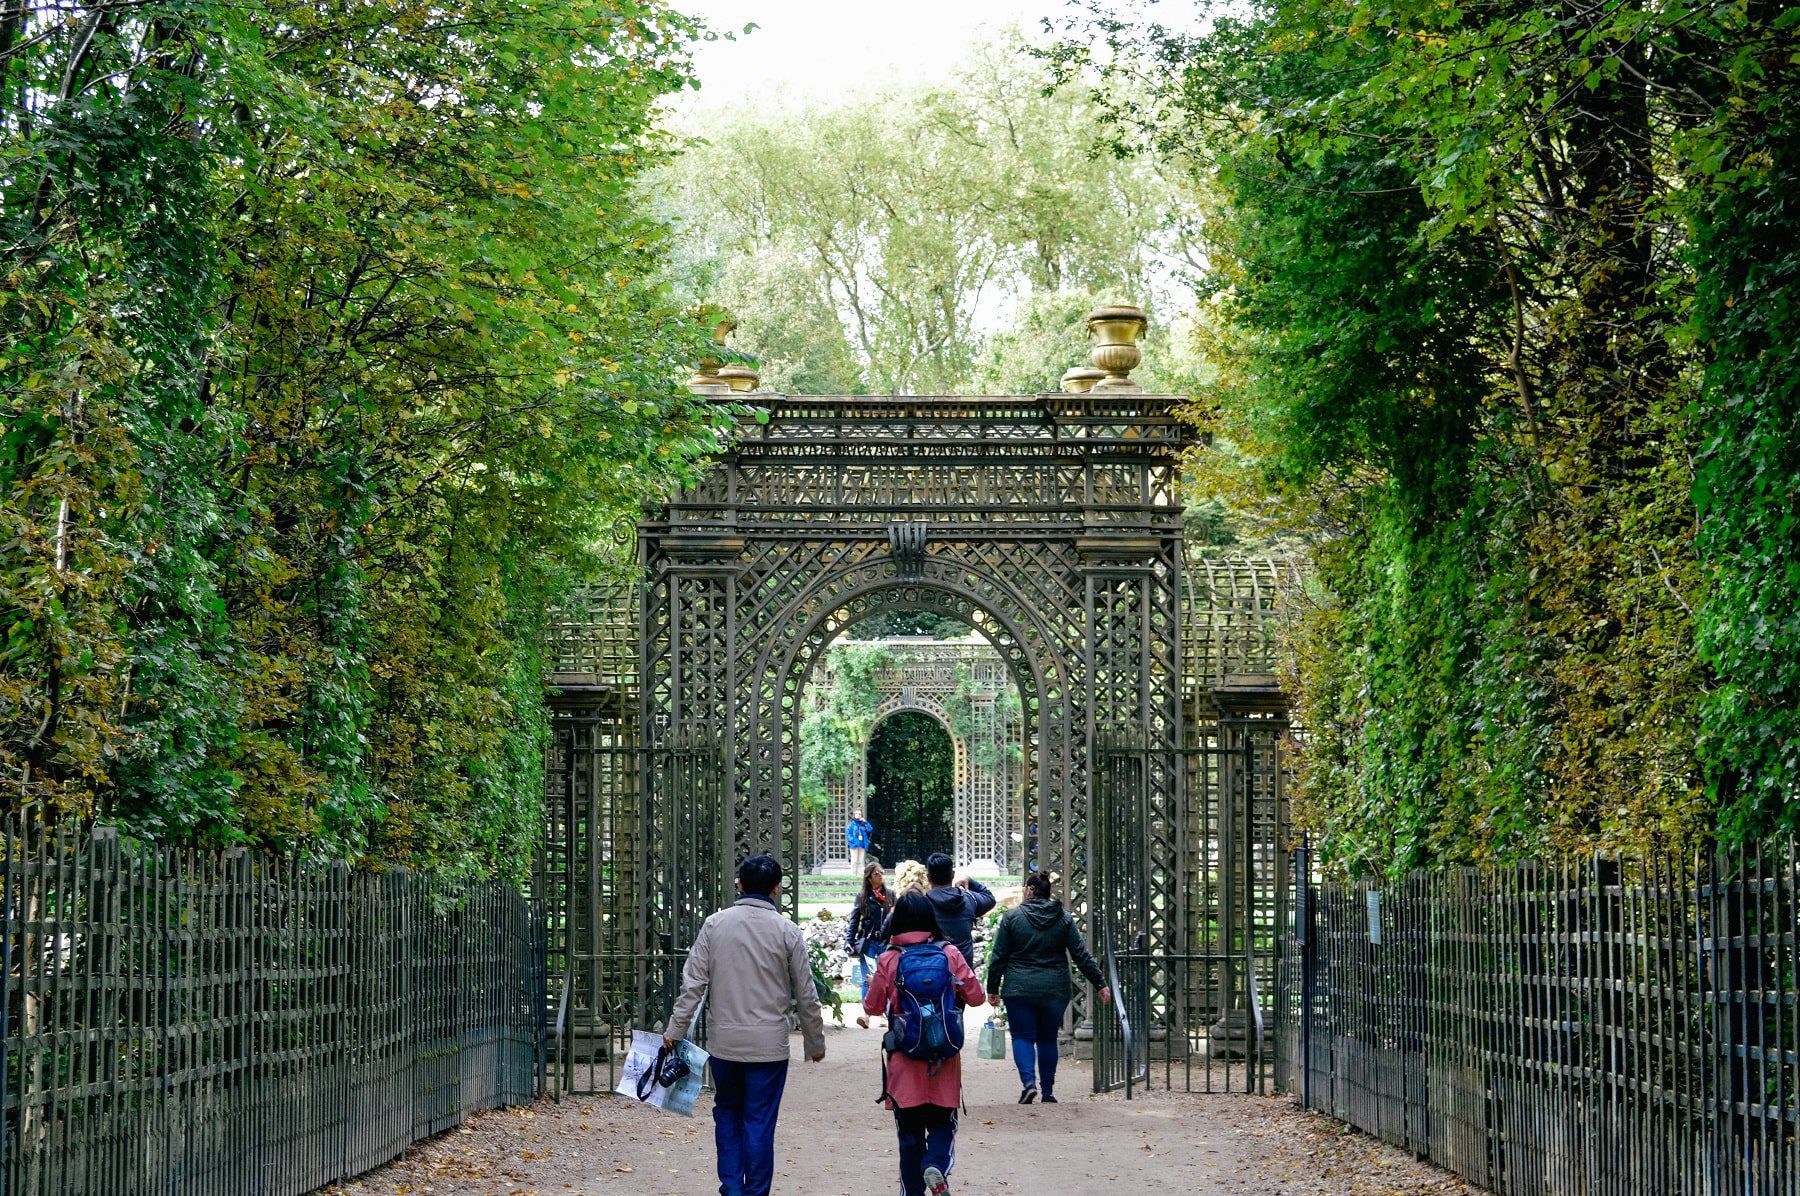 A view of the beautiful trellis walkway in the garden of Versailles